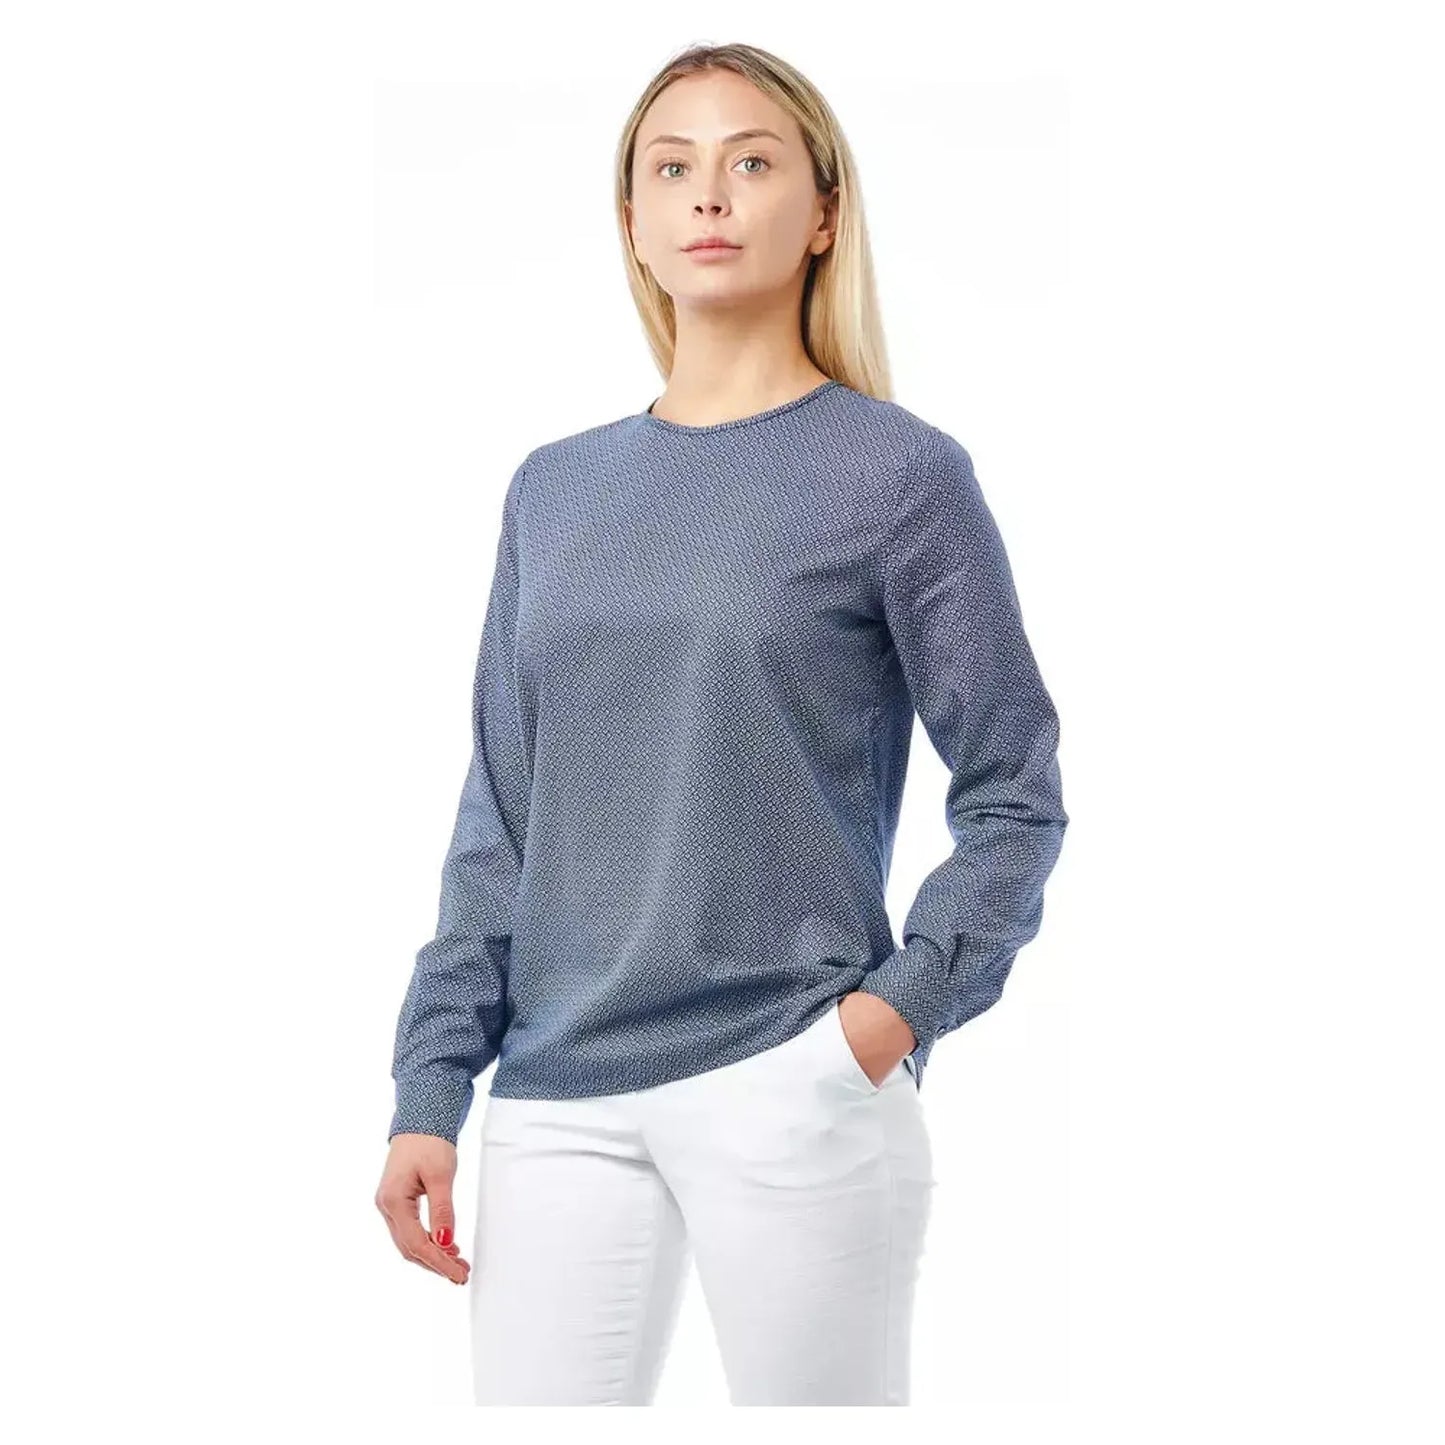 Bagutta Geometric Round Neck Cotton Blouse WOMAN TOPS AND SHIRTS blue-cotton-shirt-2